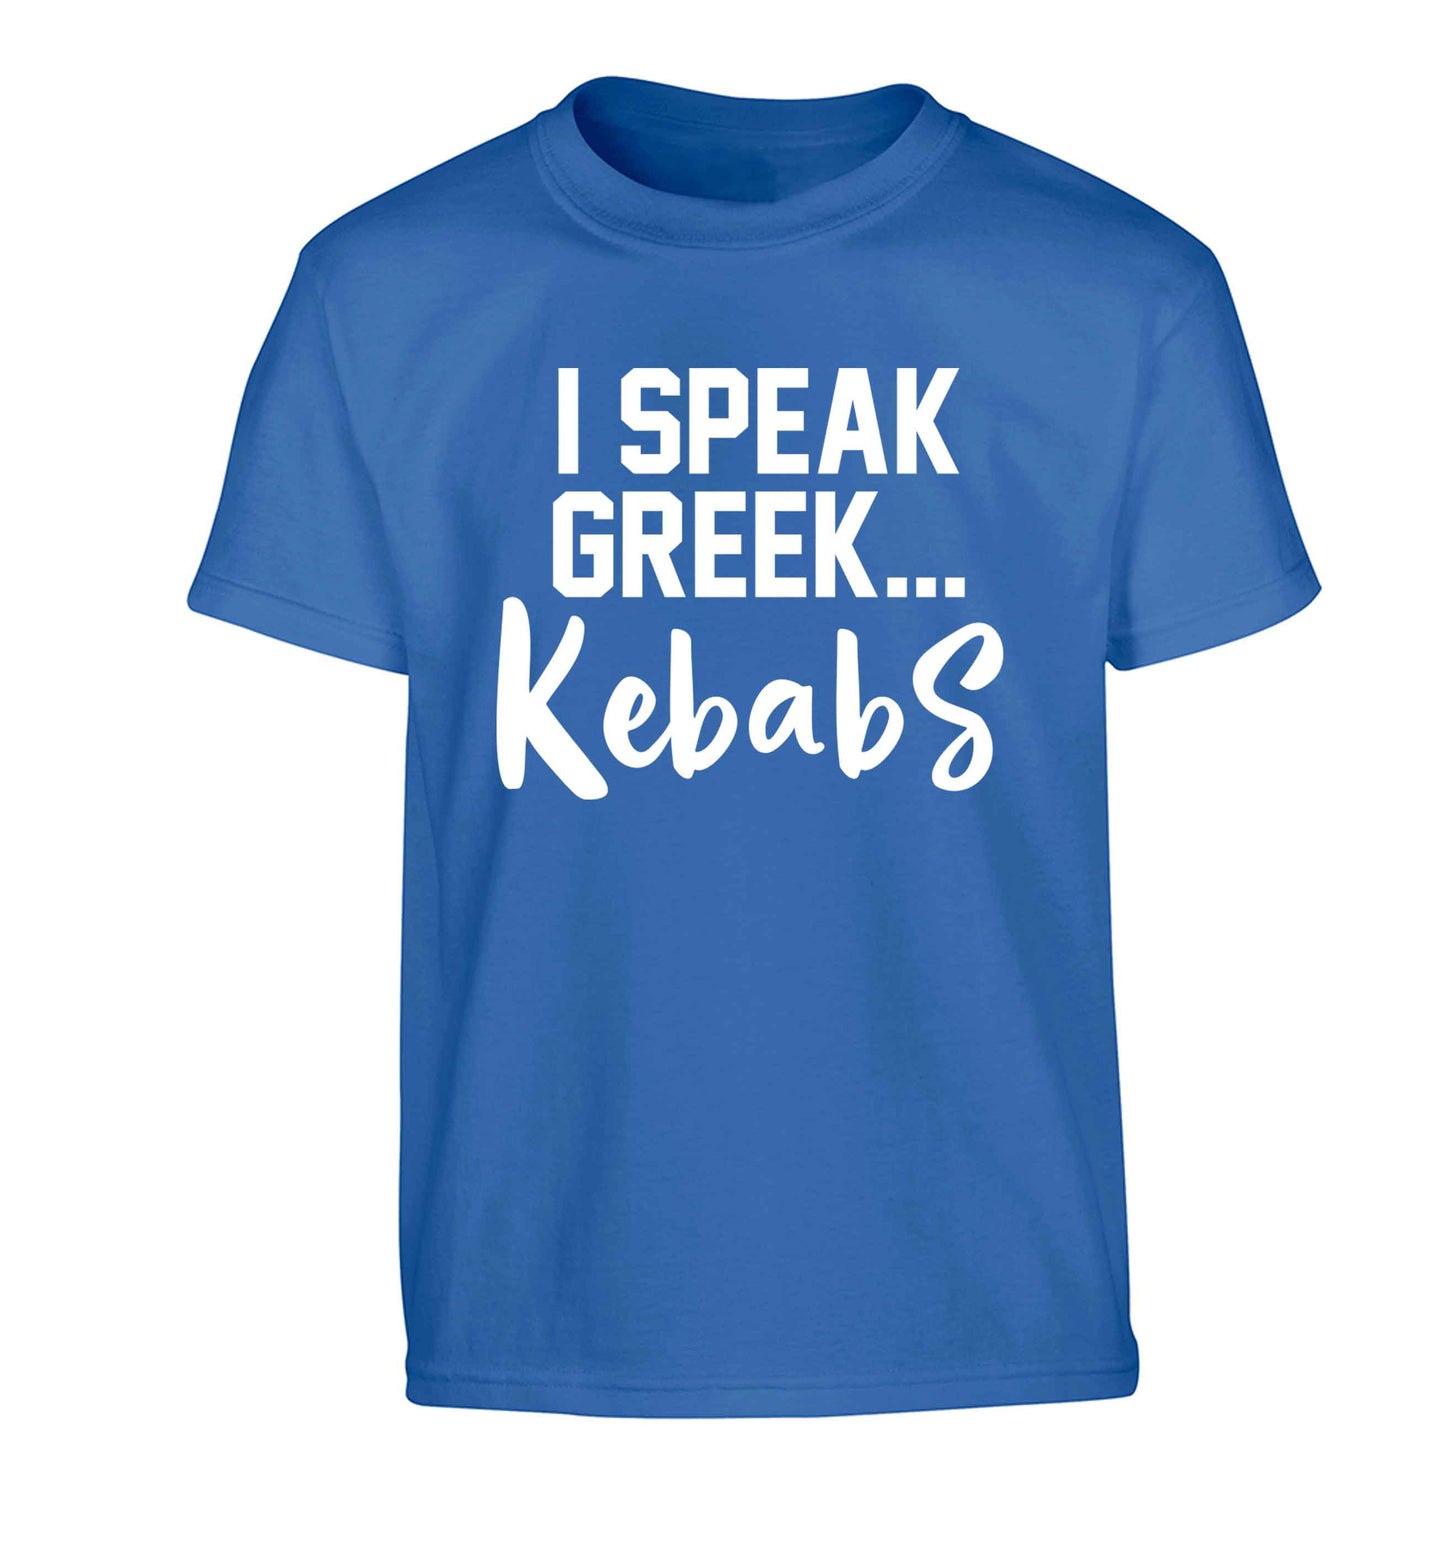 I speak Greek...kebabs Children's blue Tshirt 12-13 Years